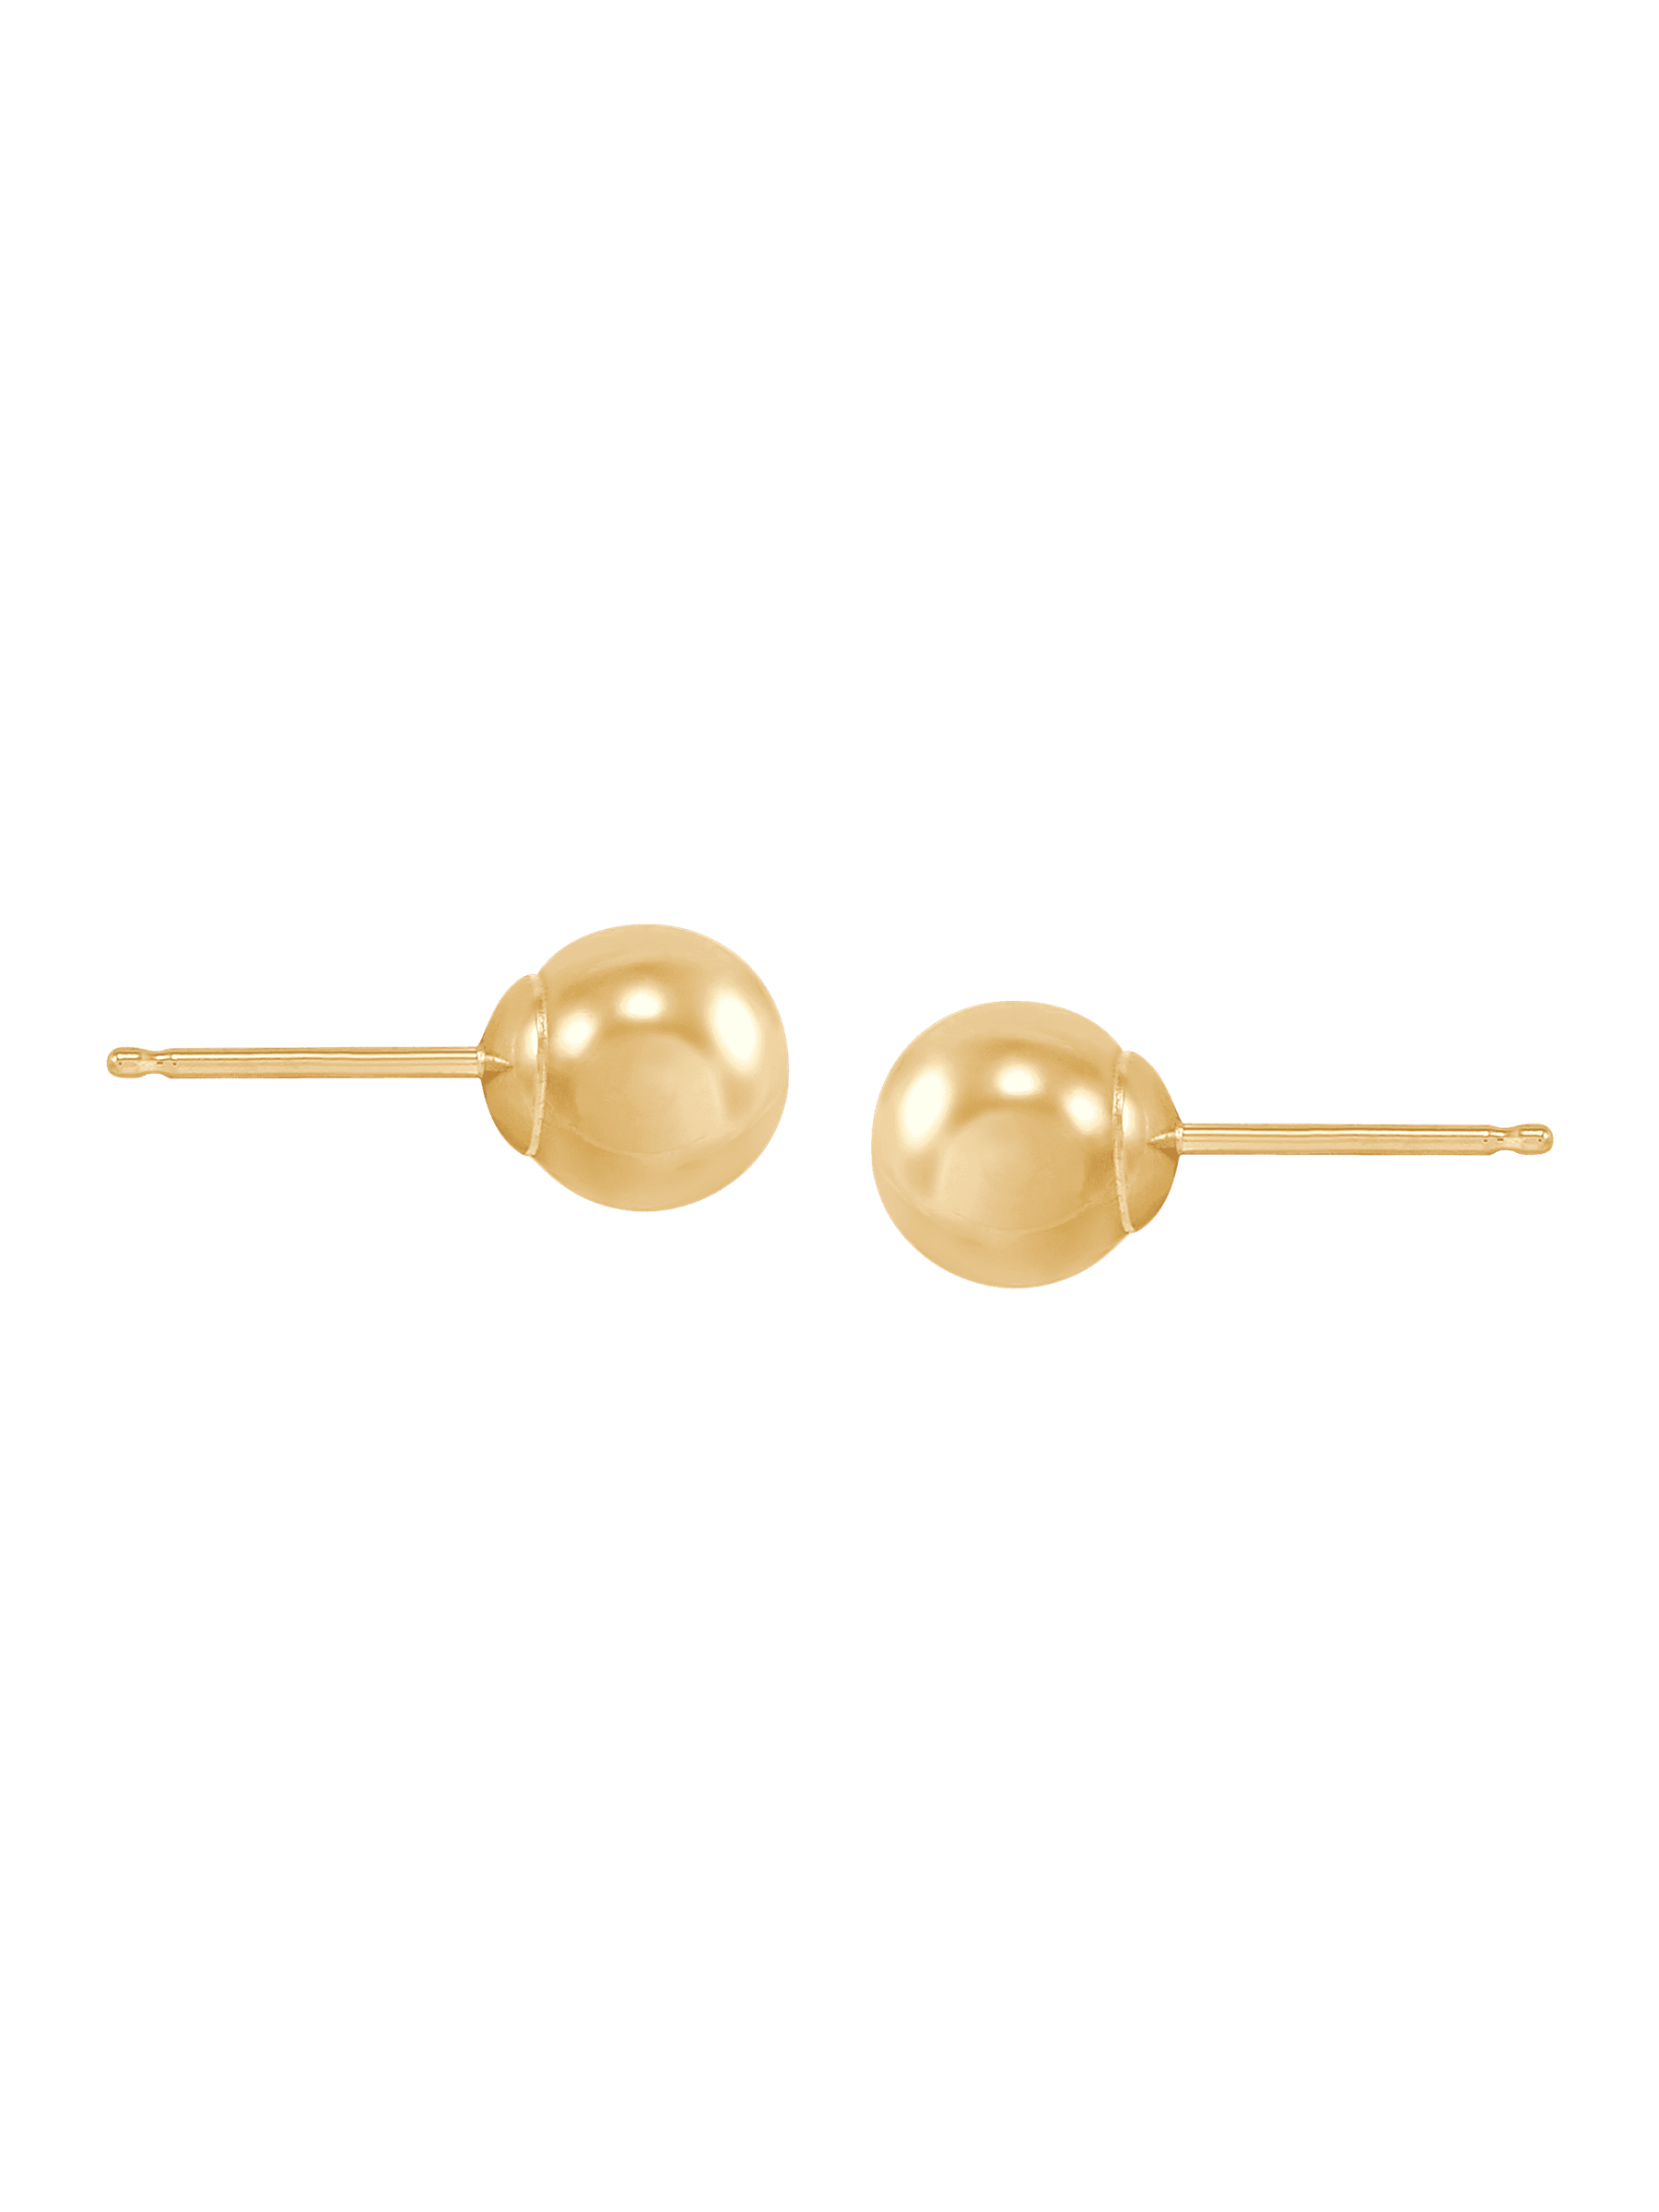 Women's Finecraft 6mm Ball Stud Earrings in 14kt Yellow Gold - image 3 of 5